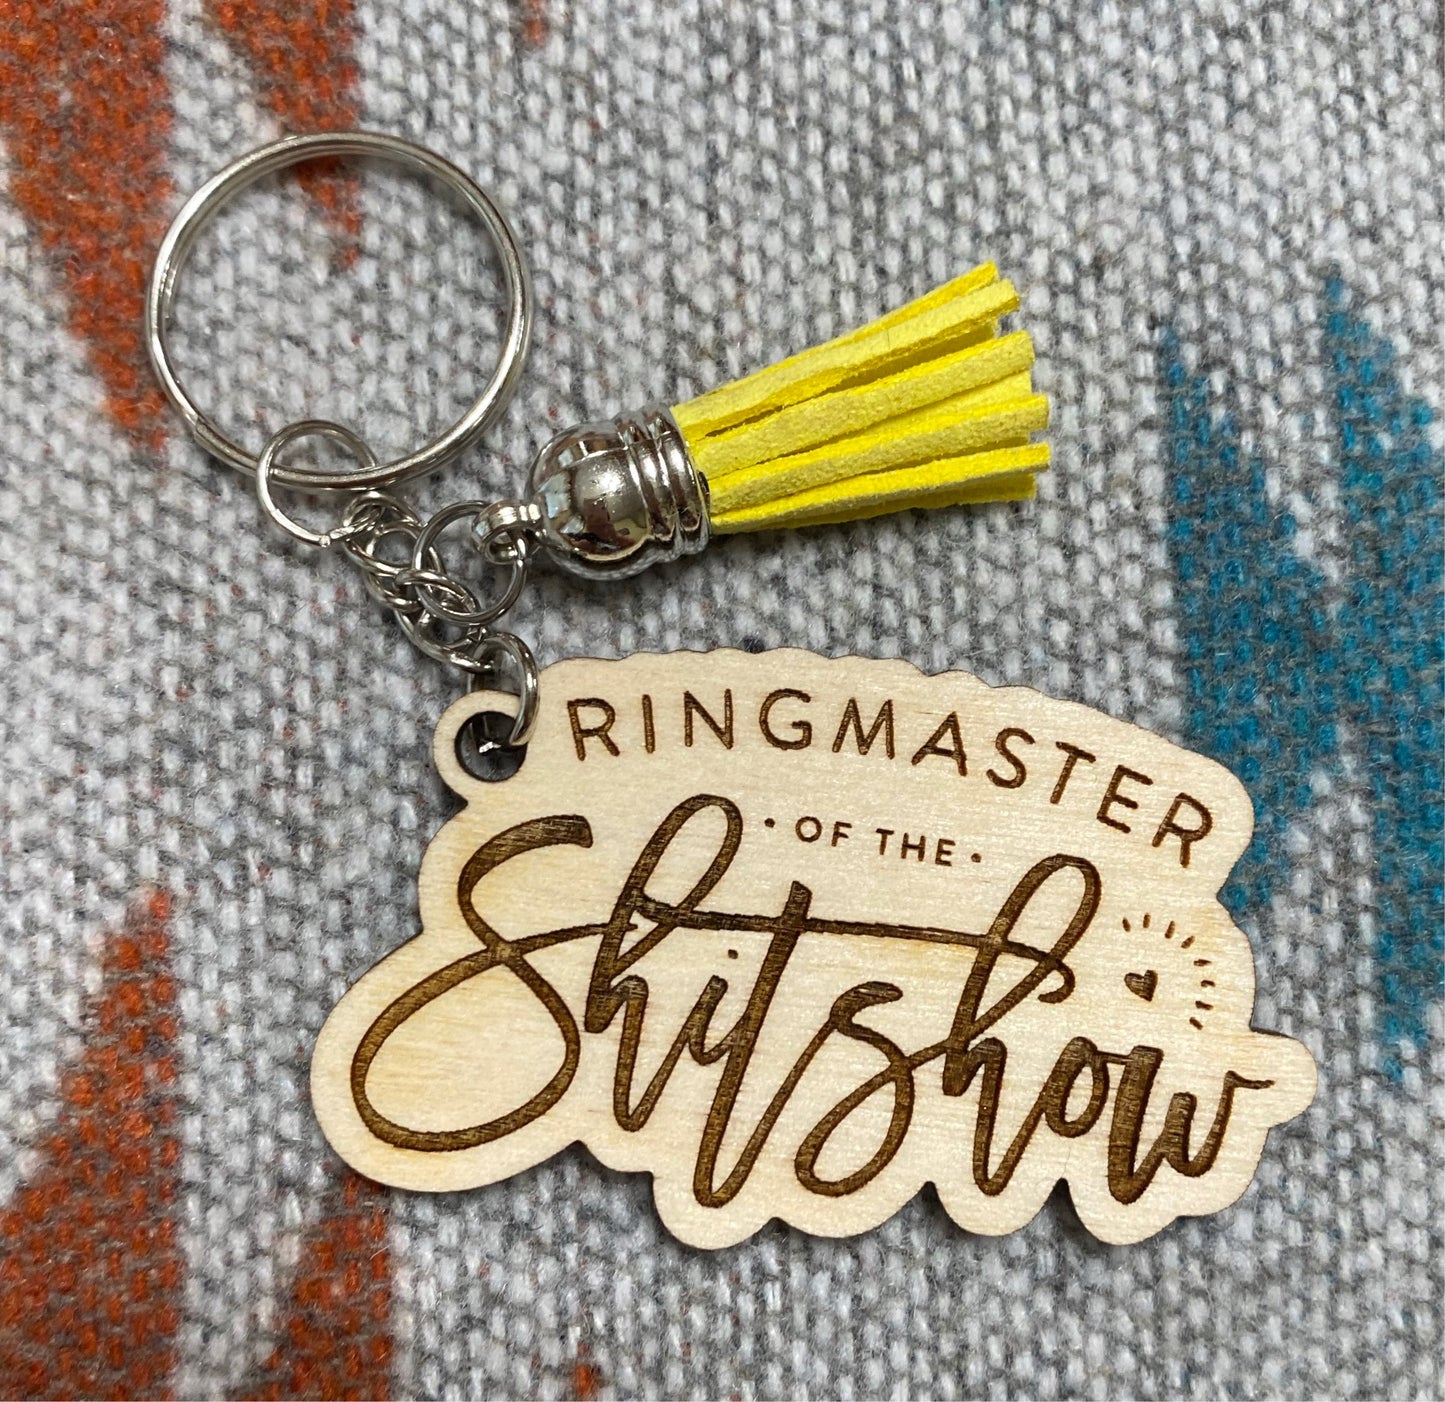 Ringmaster of the Shitshow keychain